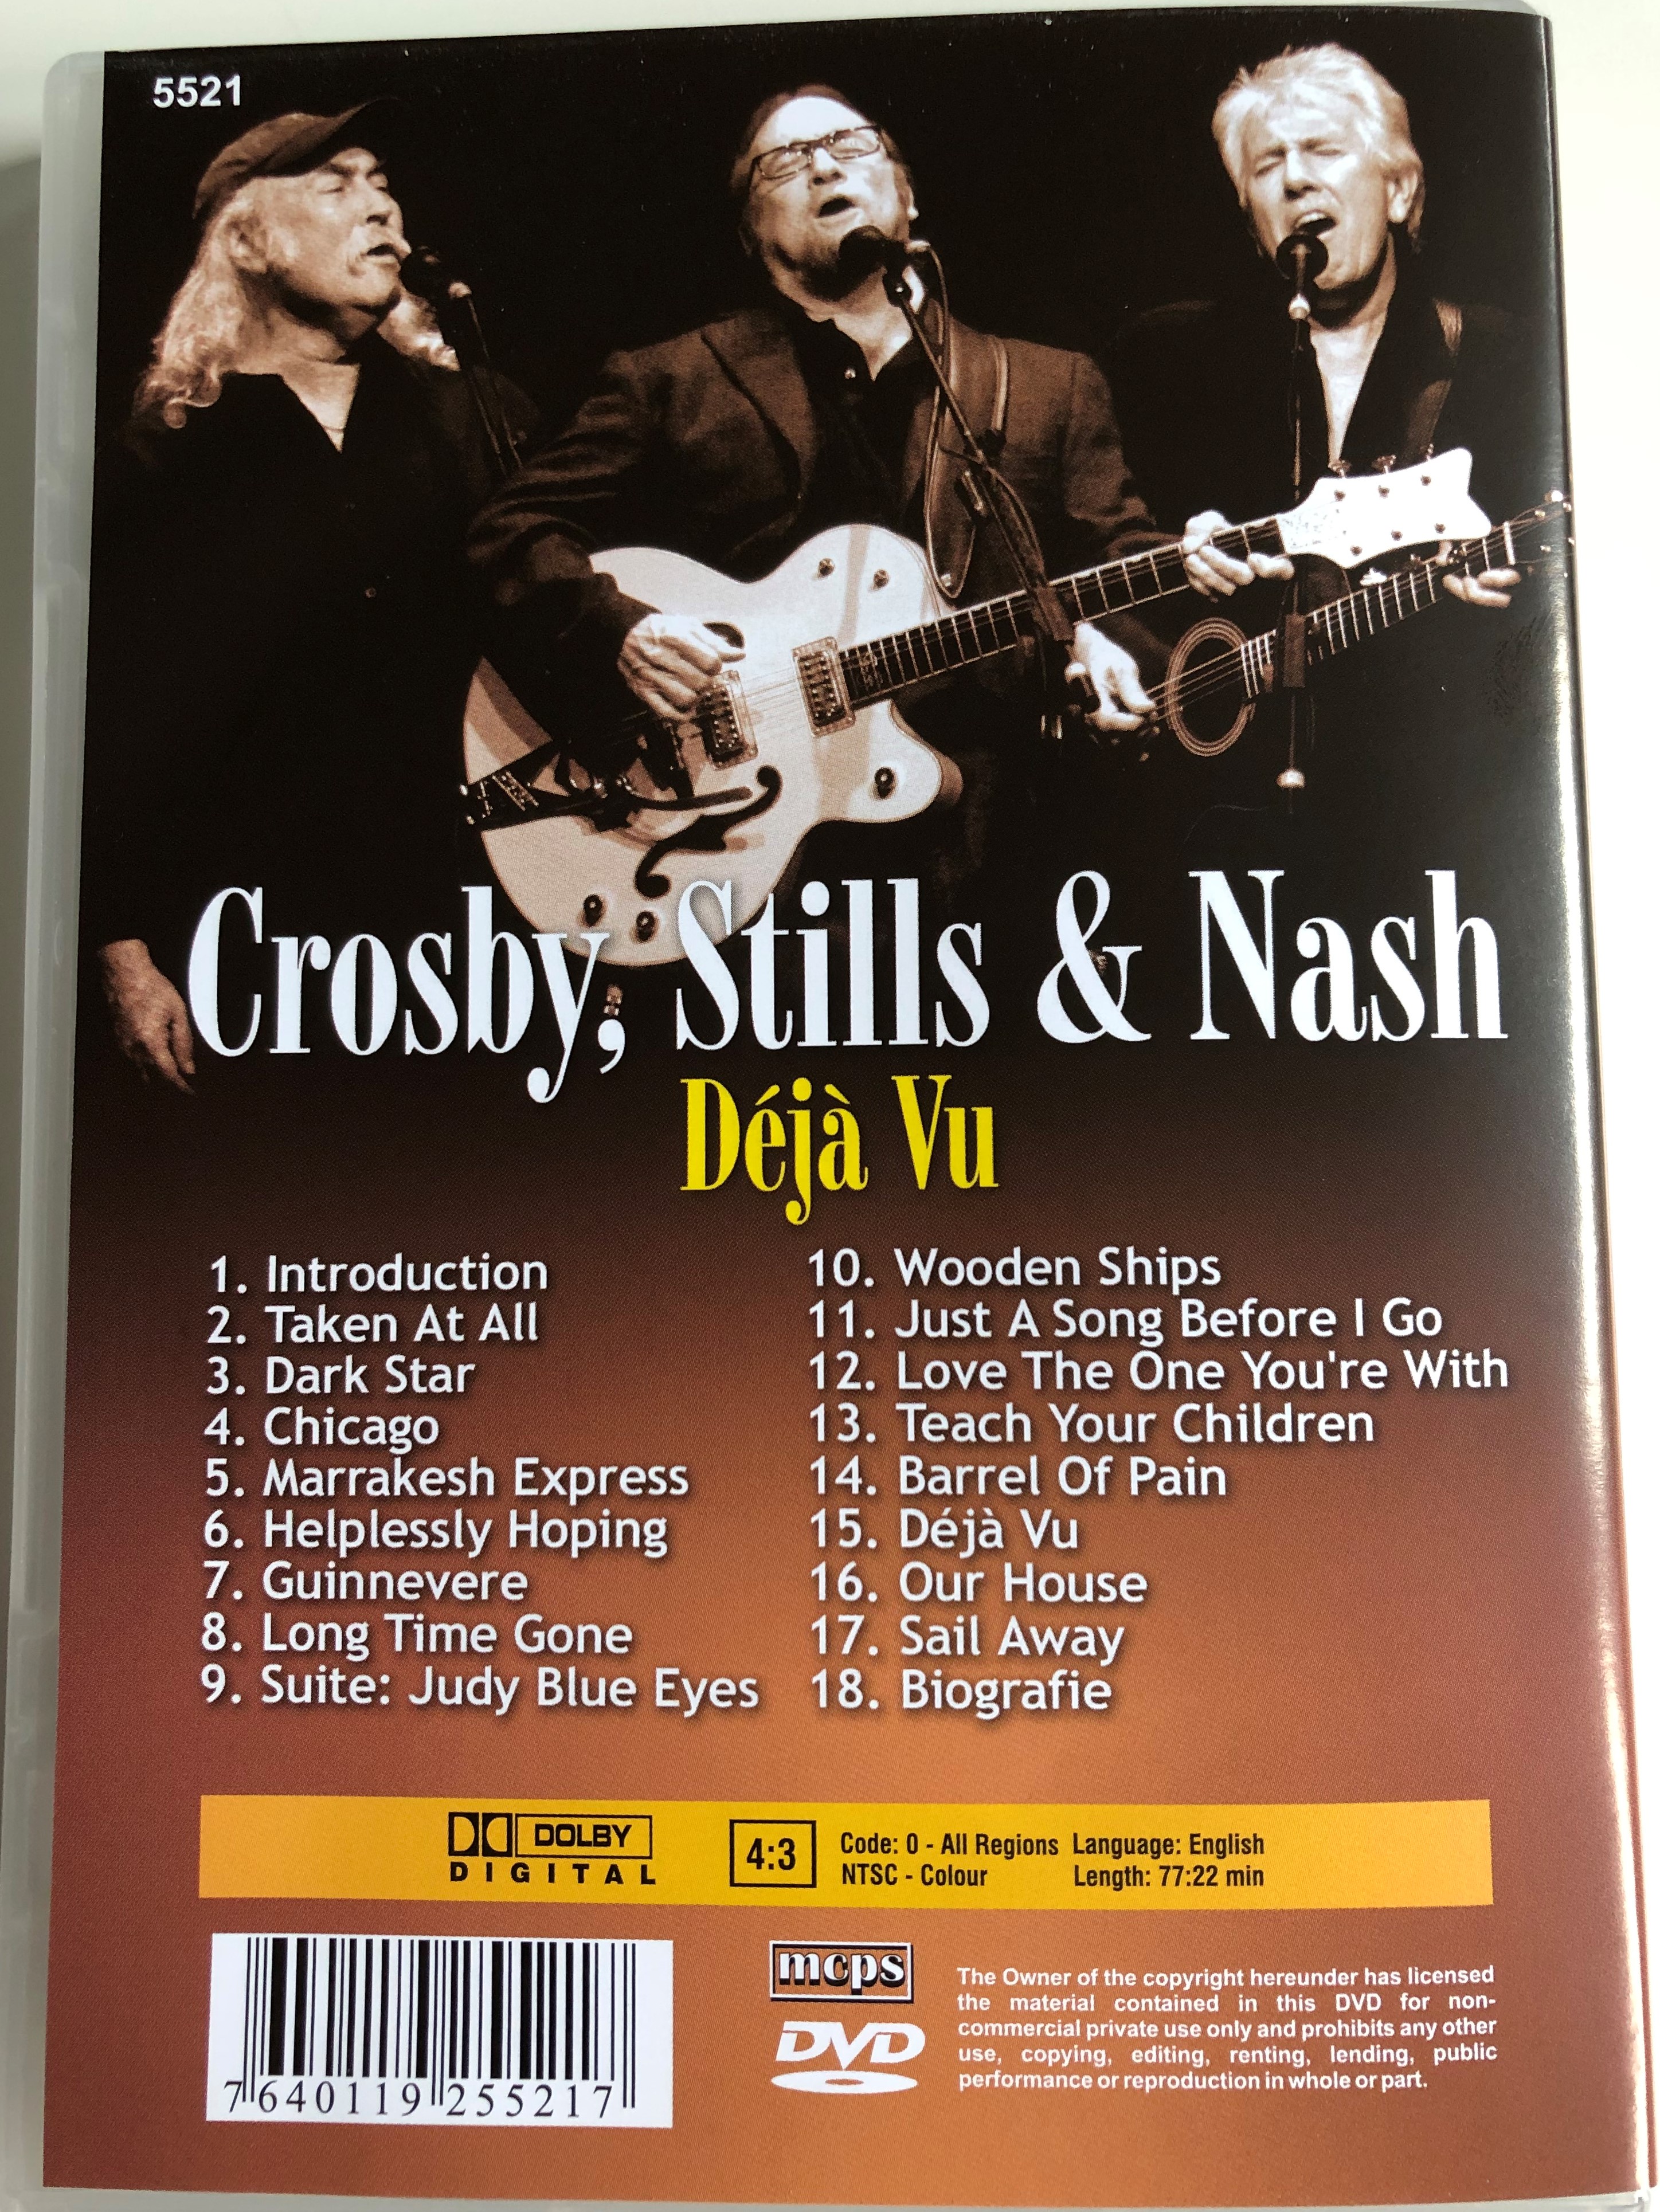 Crosby, Stills & Nash - Déjá Vu DVD / Taken At All, Chicago, Helplessly  Hoping, Wooden Ships, Our House - bibleinmylanguage